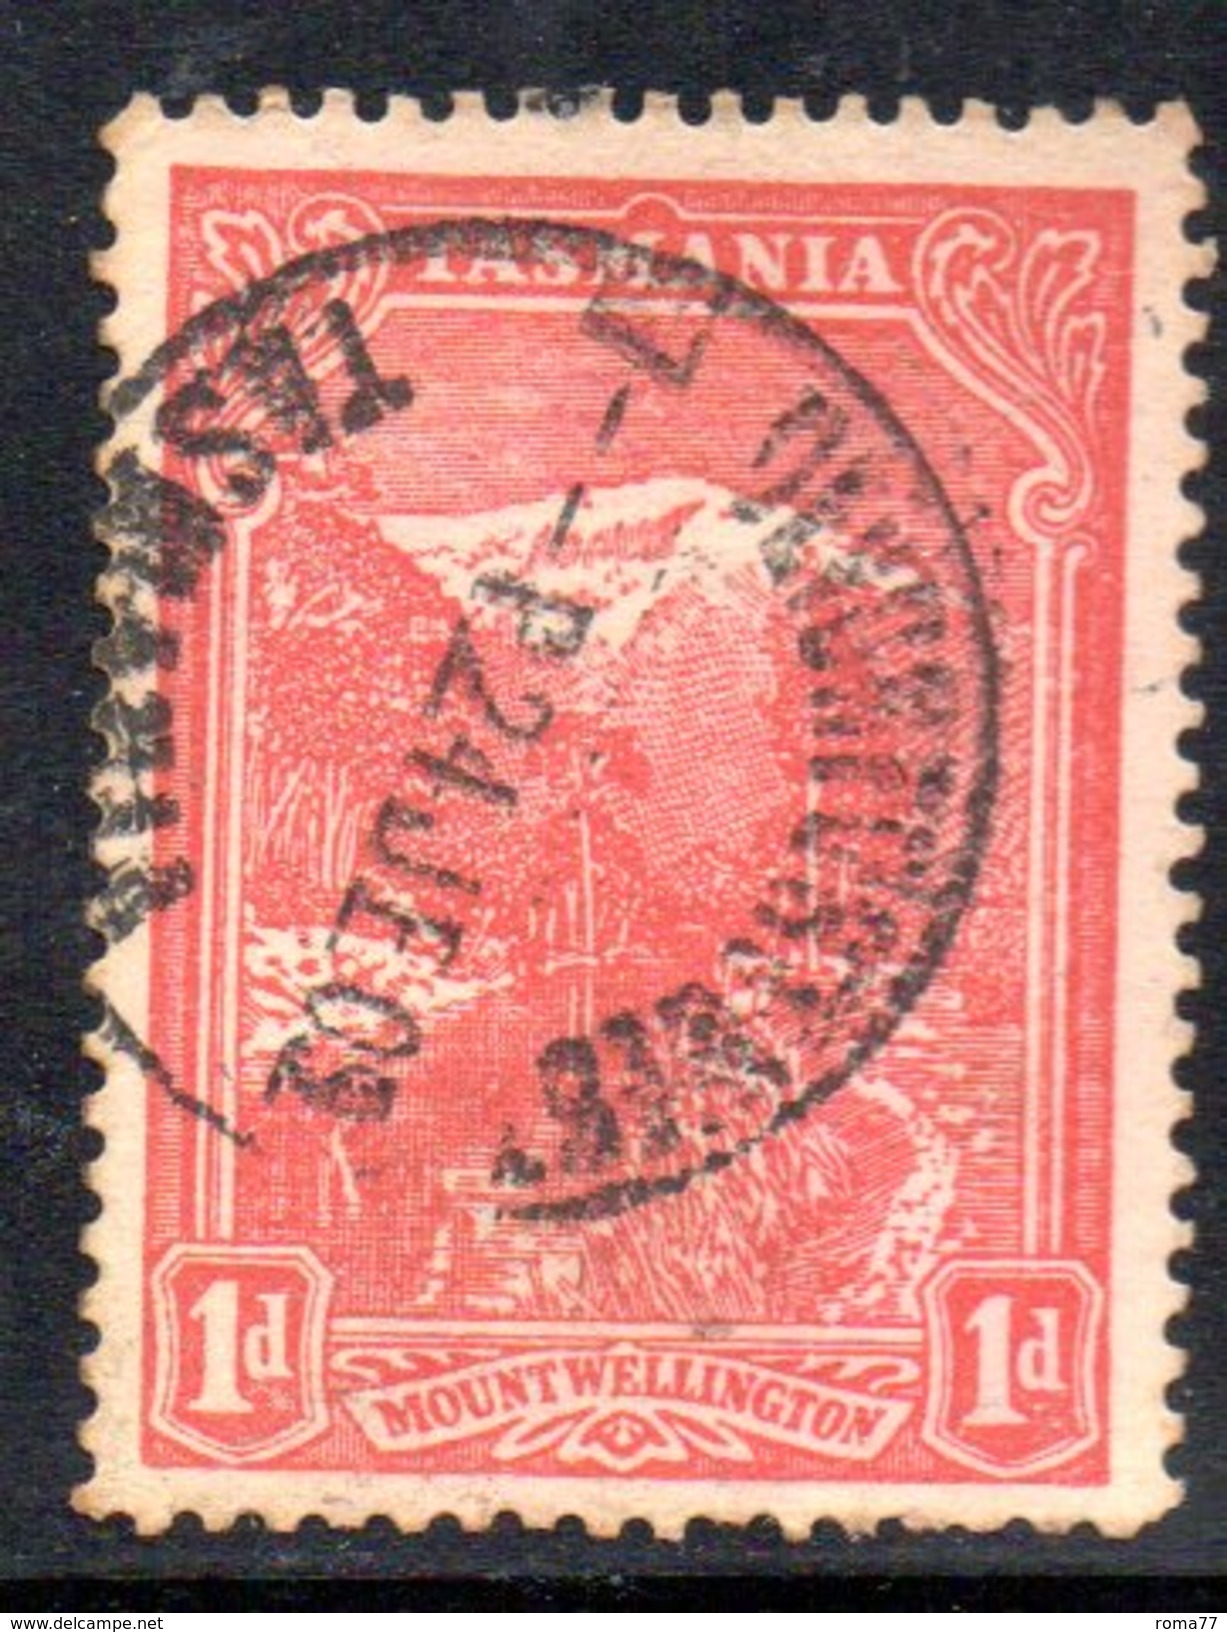 Xp2180 - TASMANIA 1 Pence Wmk  Crown On A (SIDEWAYS) Used. - Used Stamps